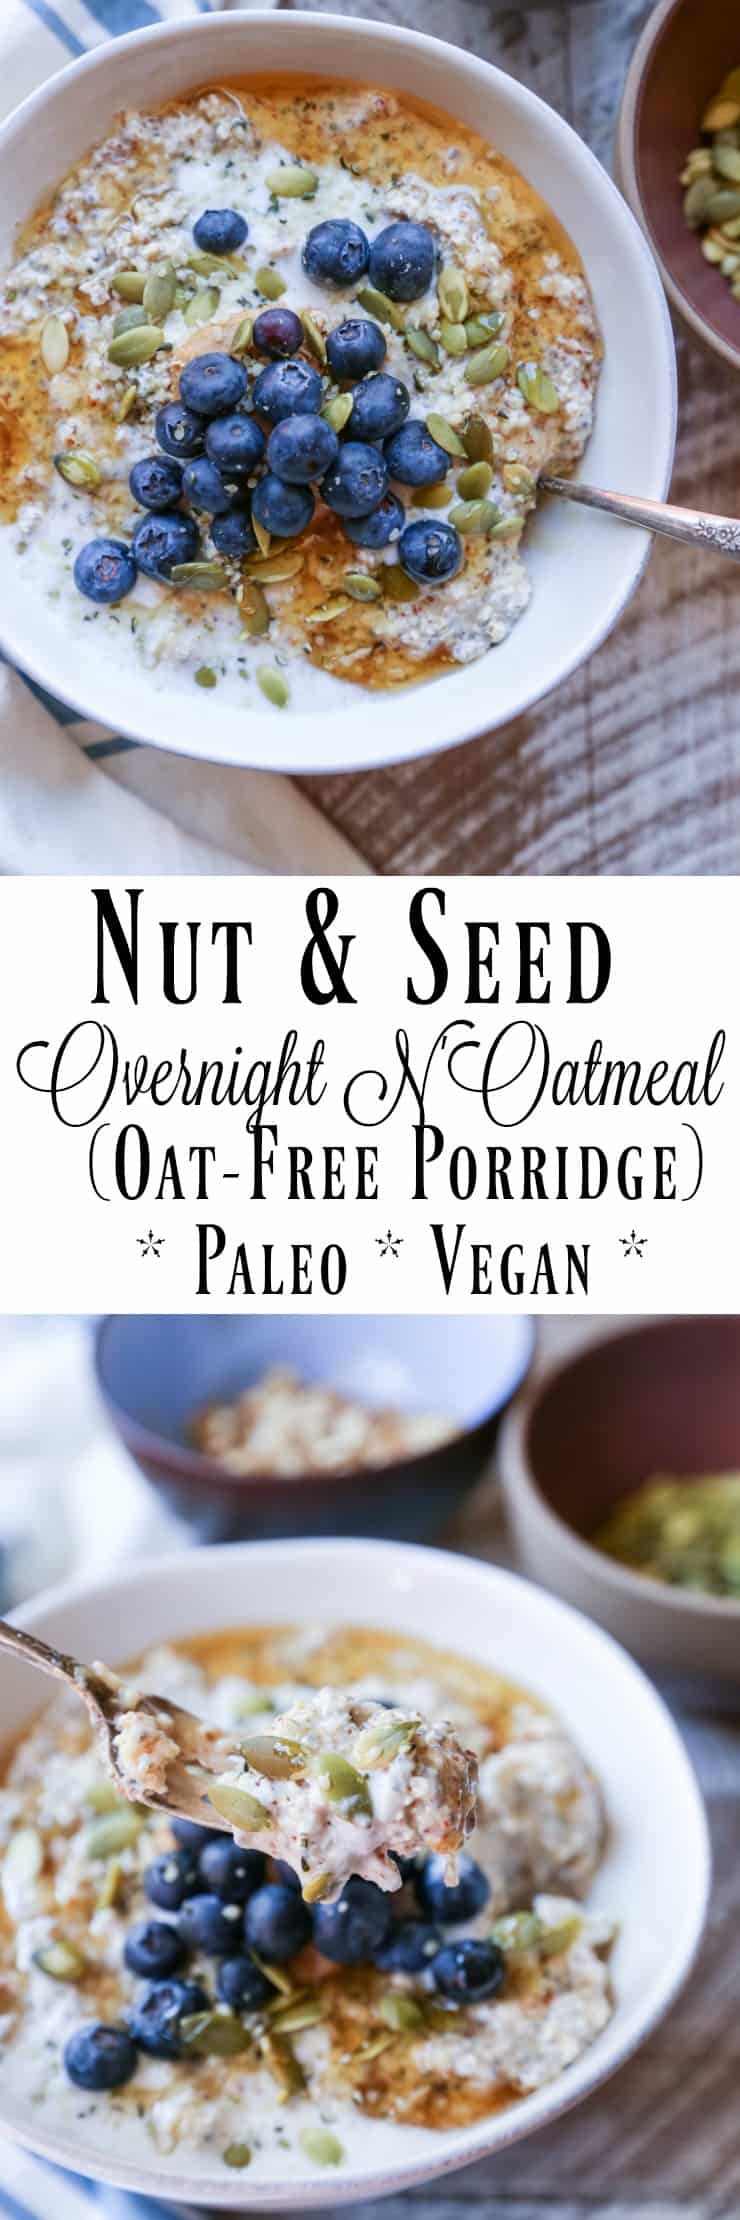 Nut and Seed Overnight N'Oatmeal - an oat-free breakfast porridge recipe that's paleo and vegan!